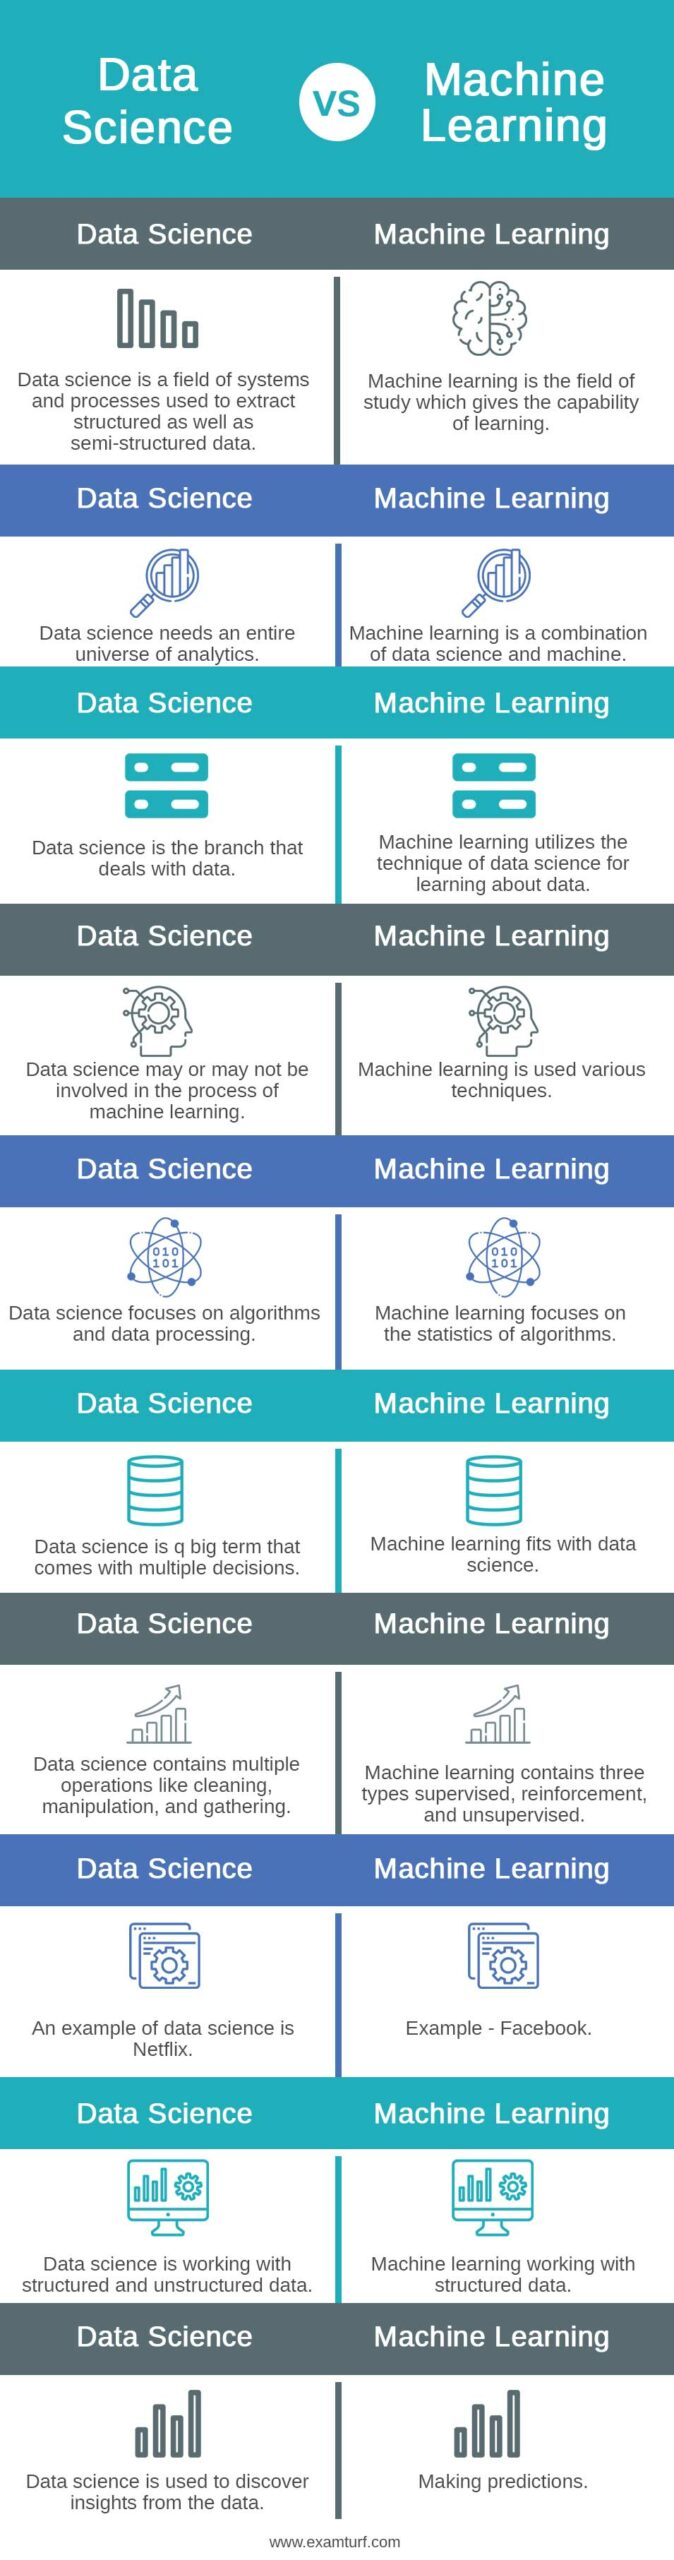 Data-Science-vs-Machine-Learning-info